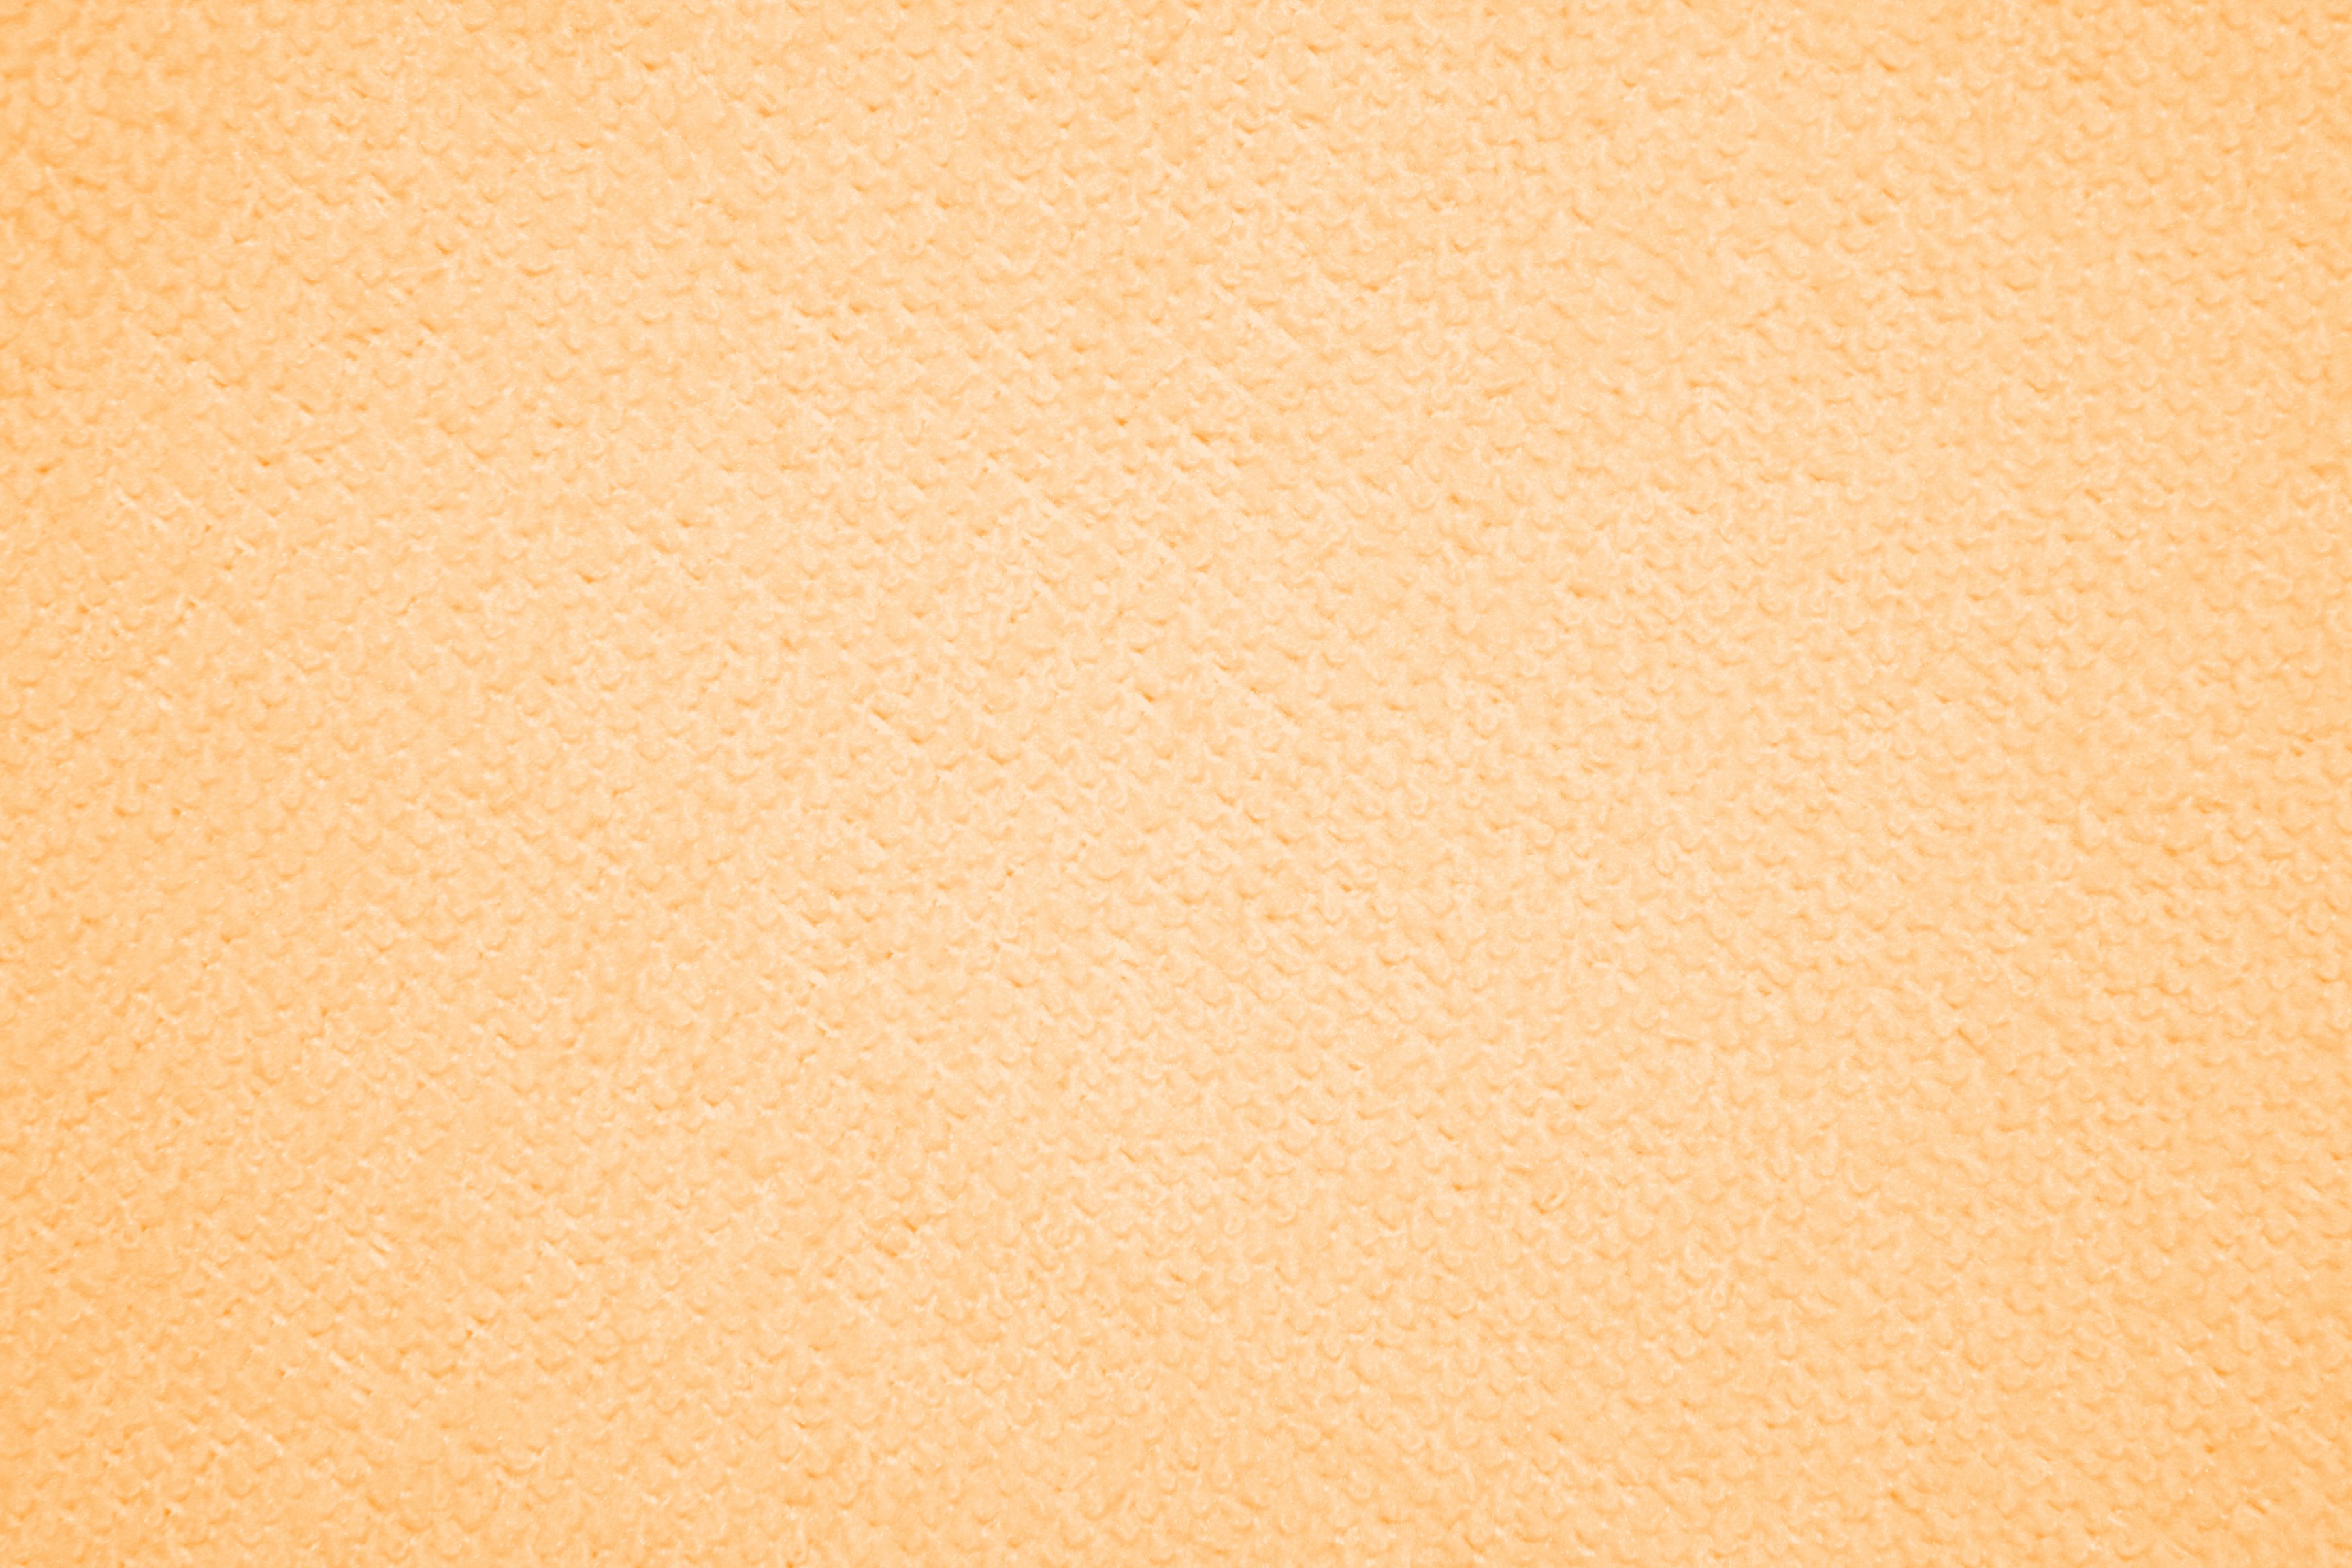 Peach Or Light Orange Microfiber Cloth Fabric Texture Picture